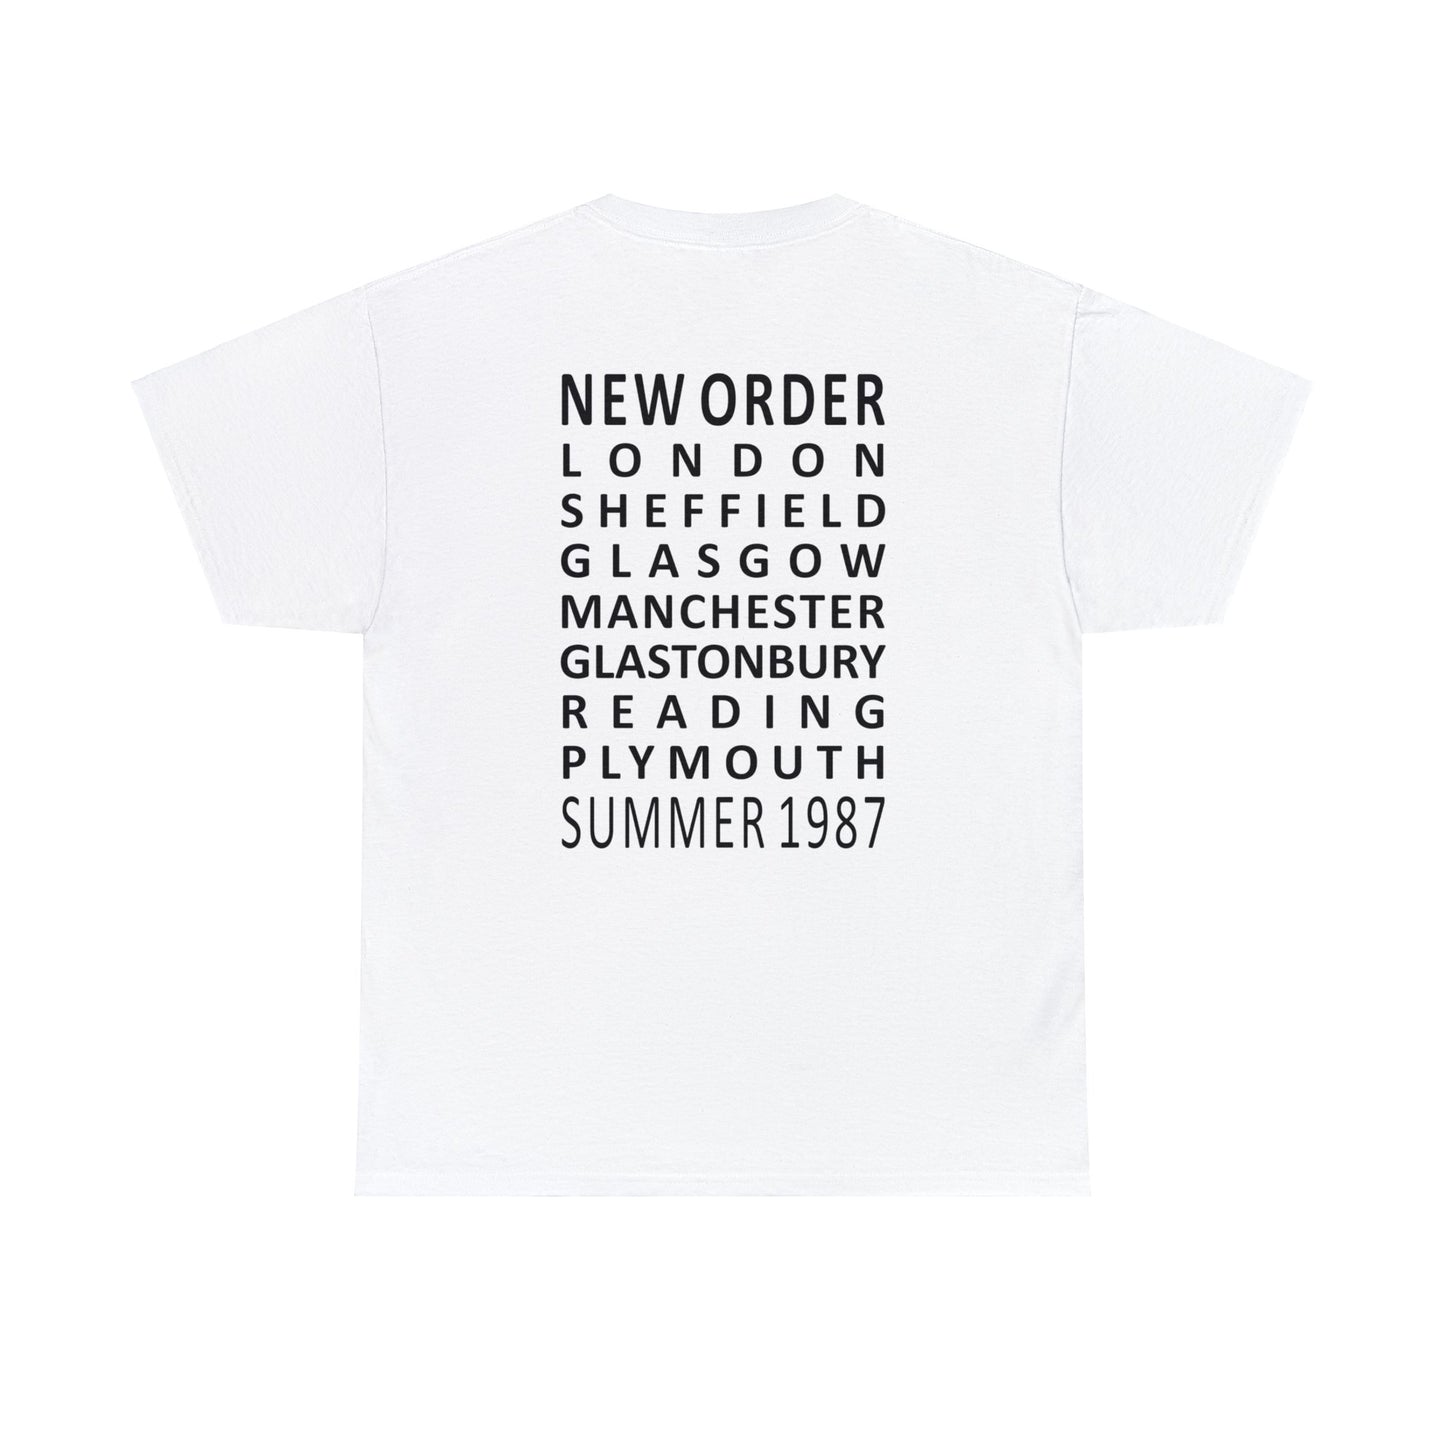 NEW ORDER Album Promo Tour 1987 T-shirt for Sale